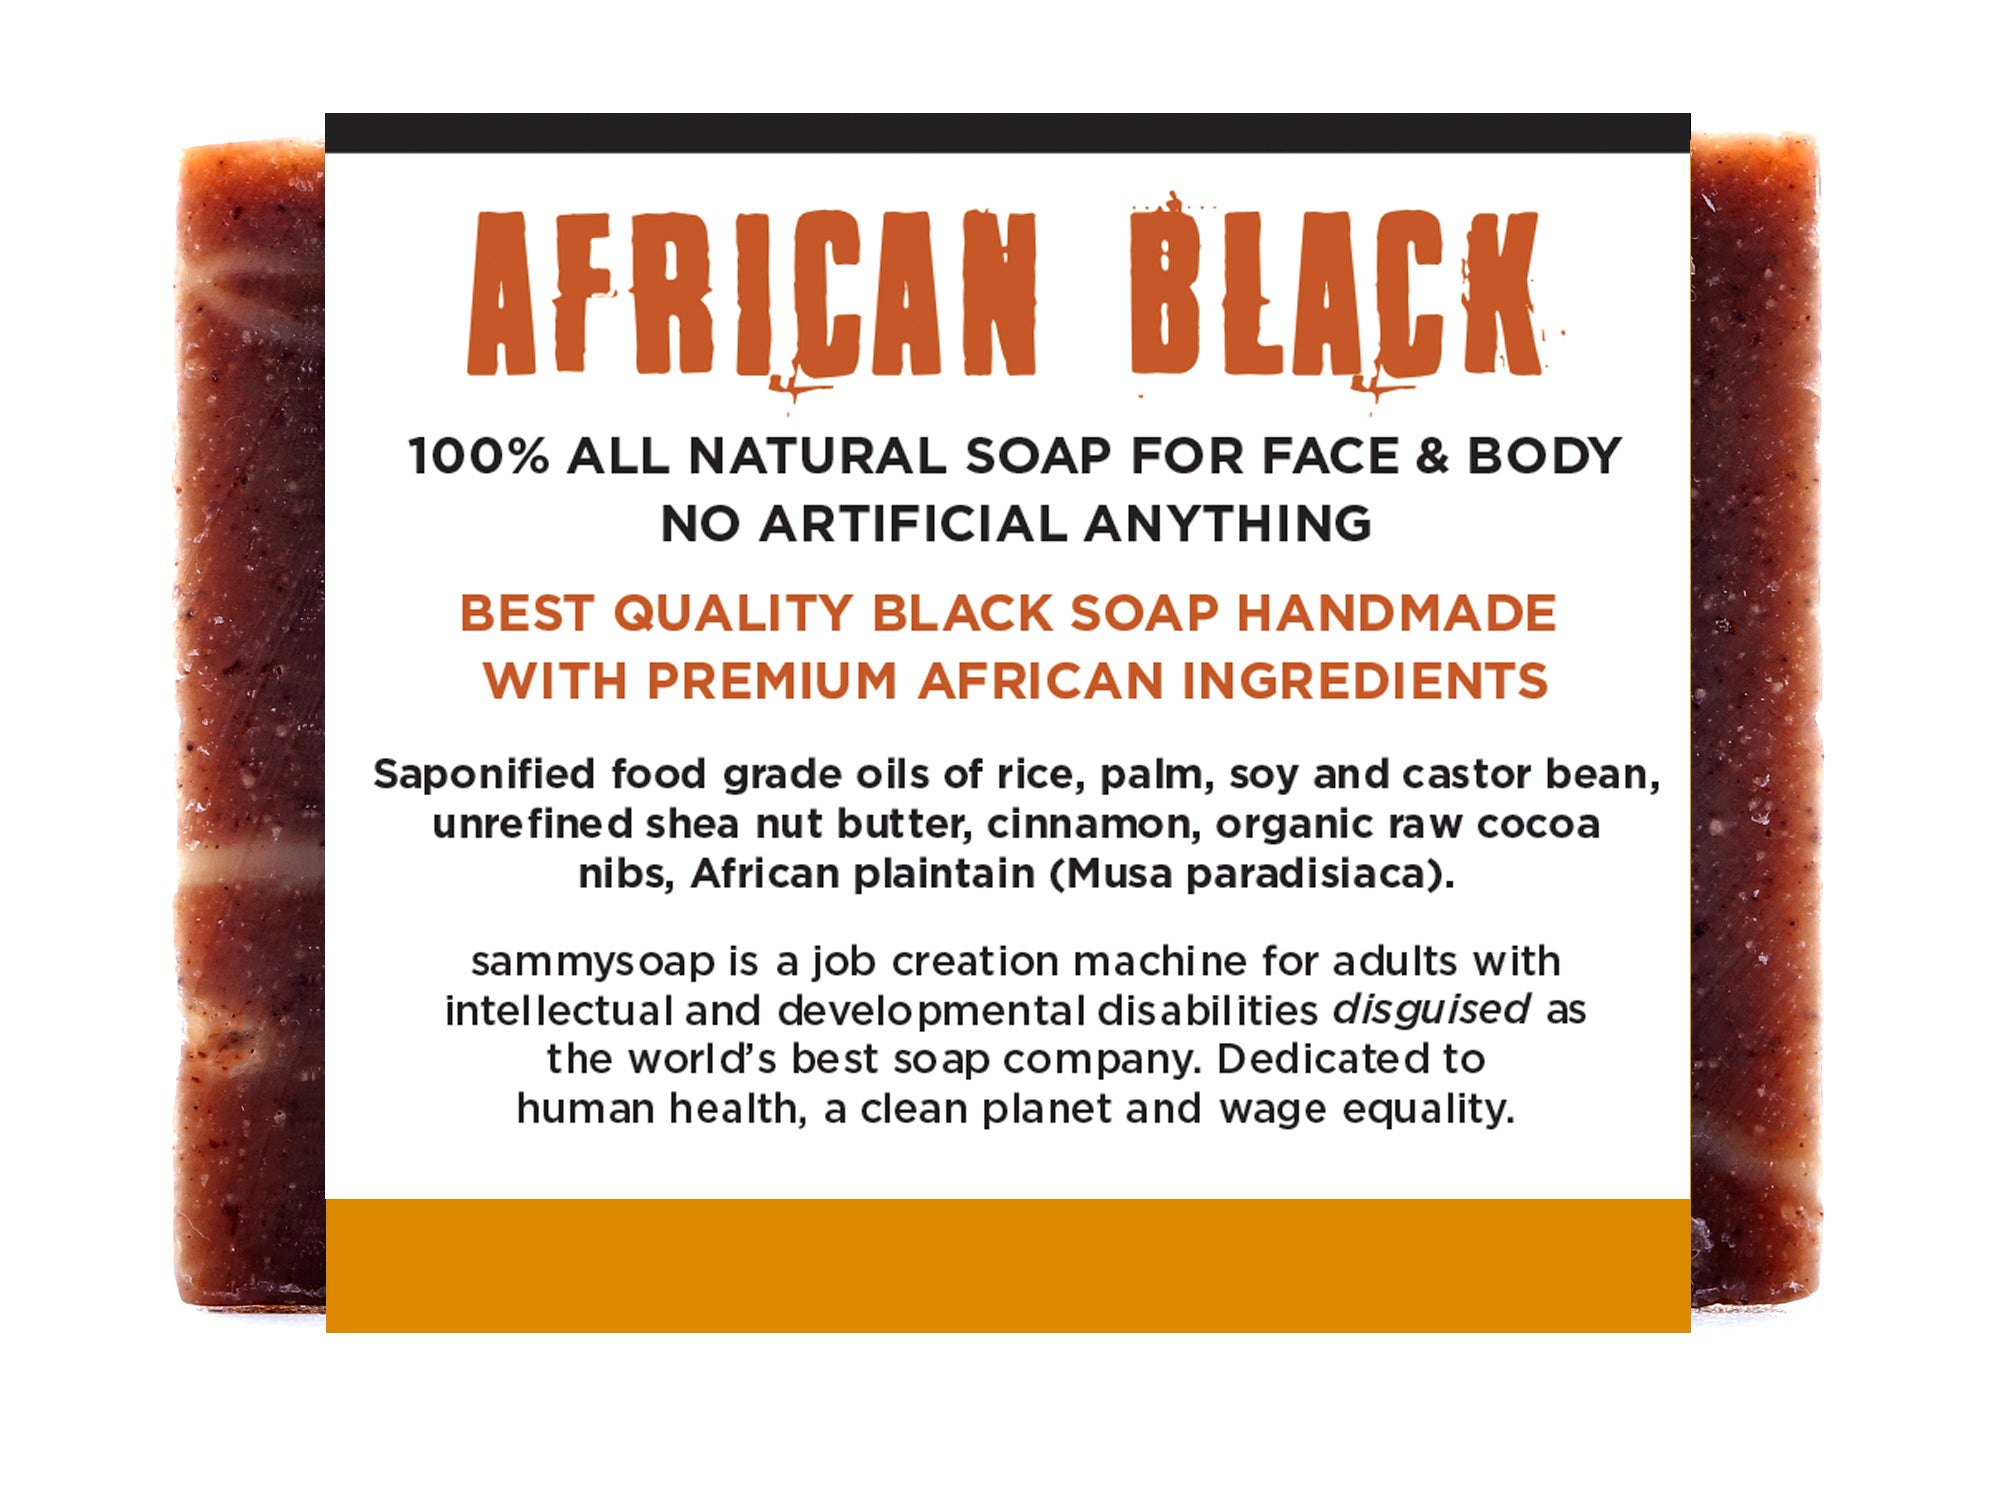 African Black